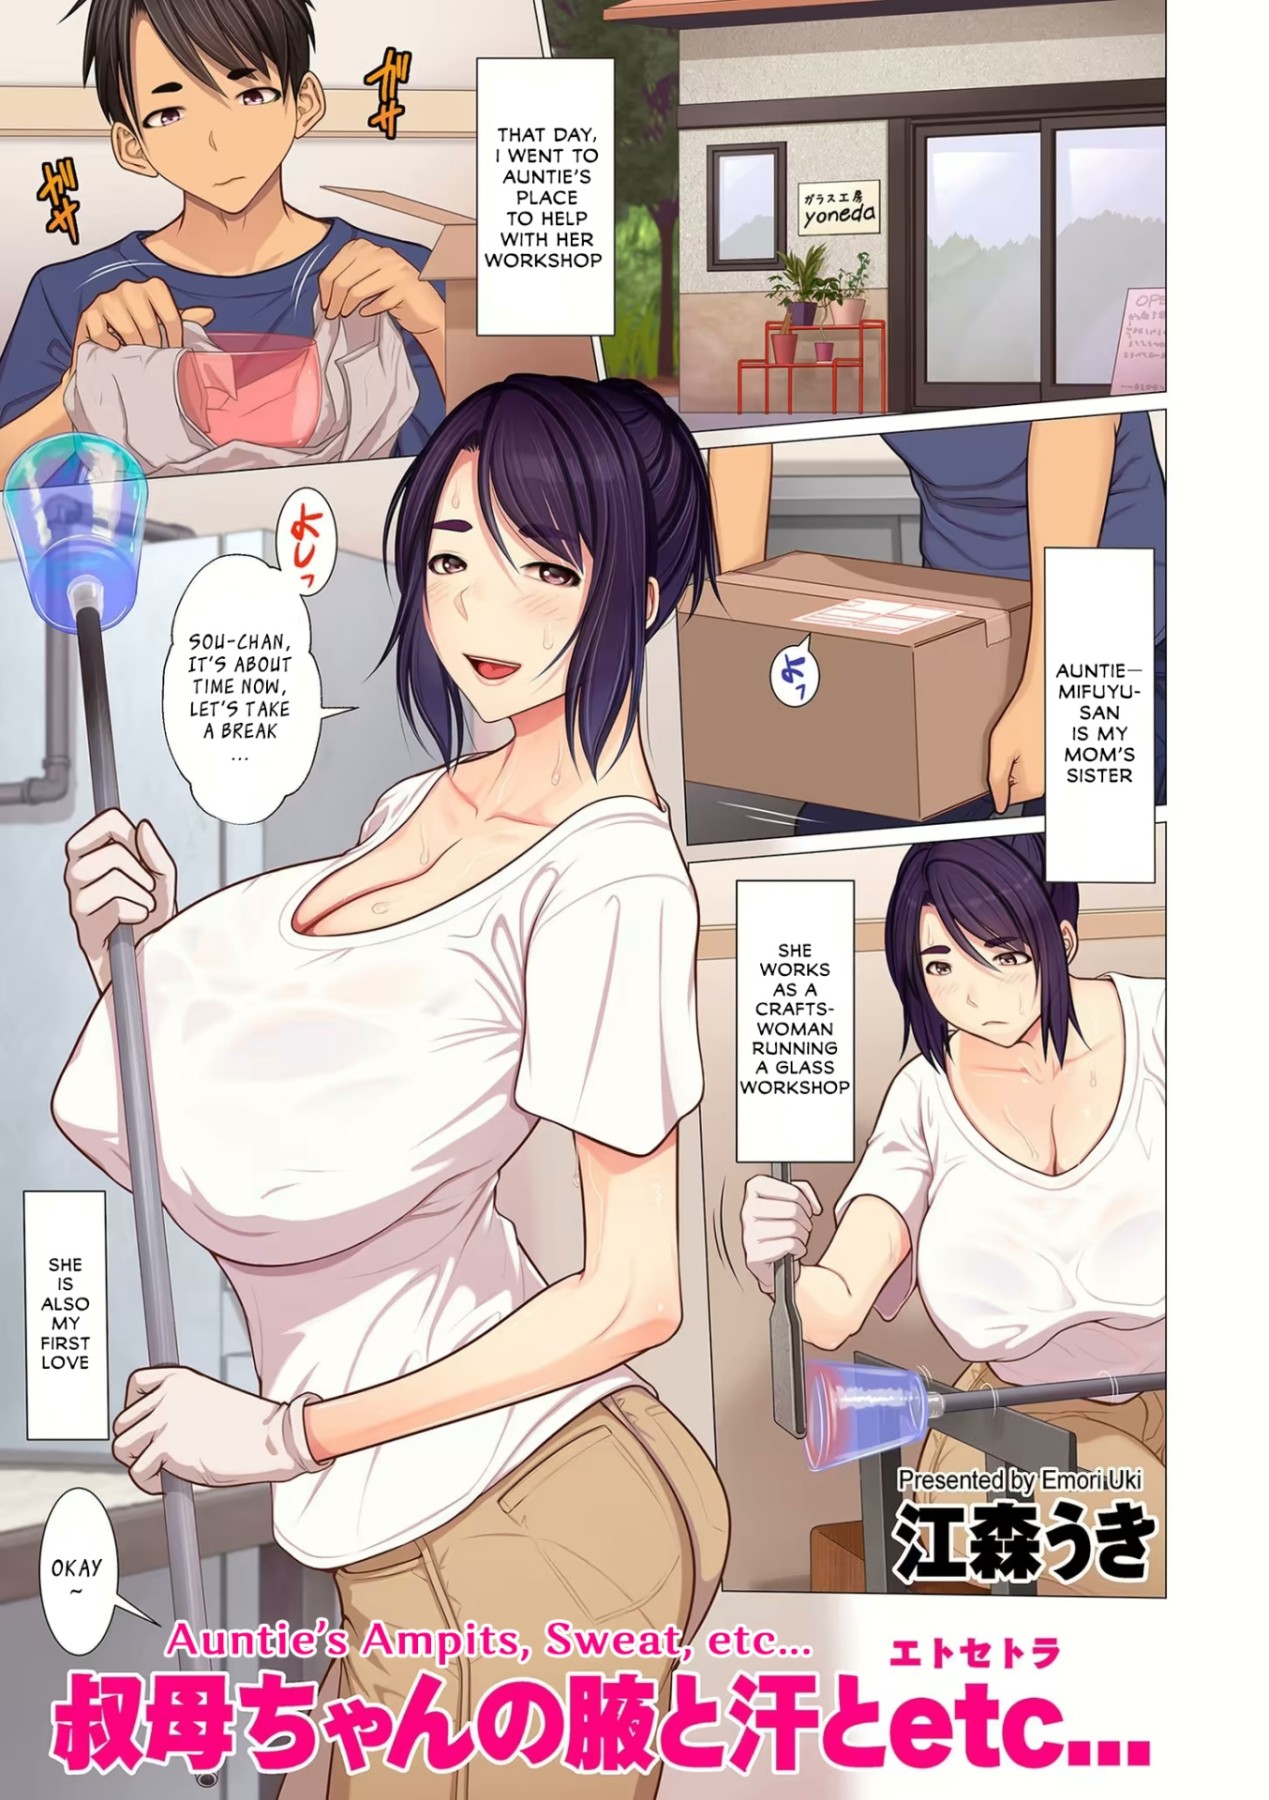 Hentai Manga Comic-Auntie's Armpits, Sweat, etc...-Read-1